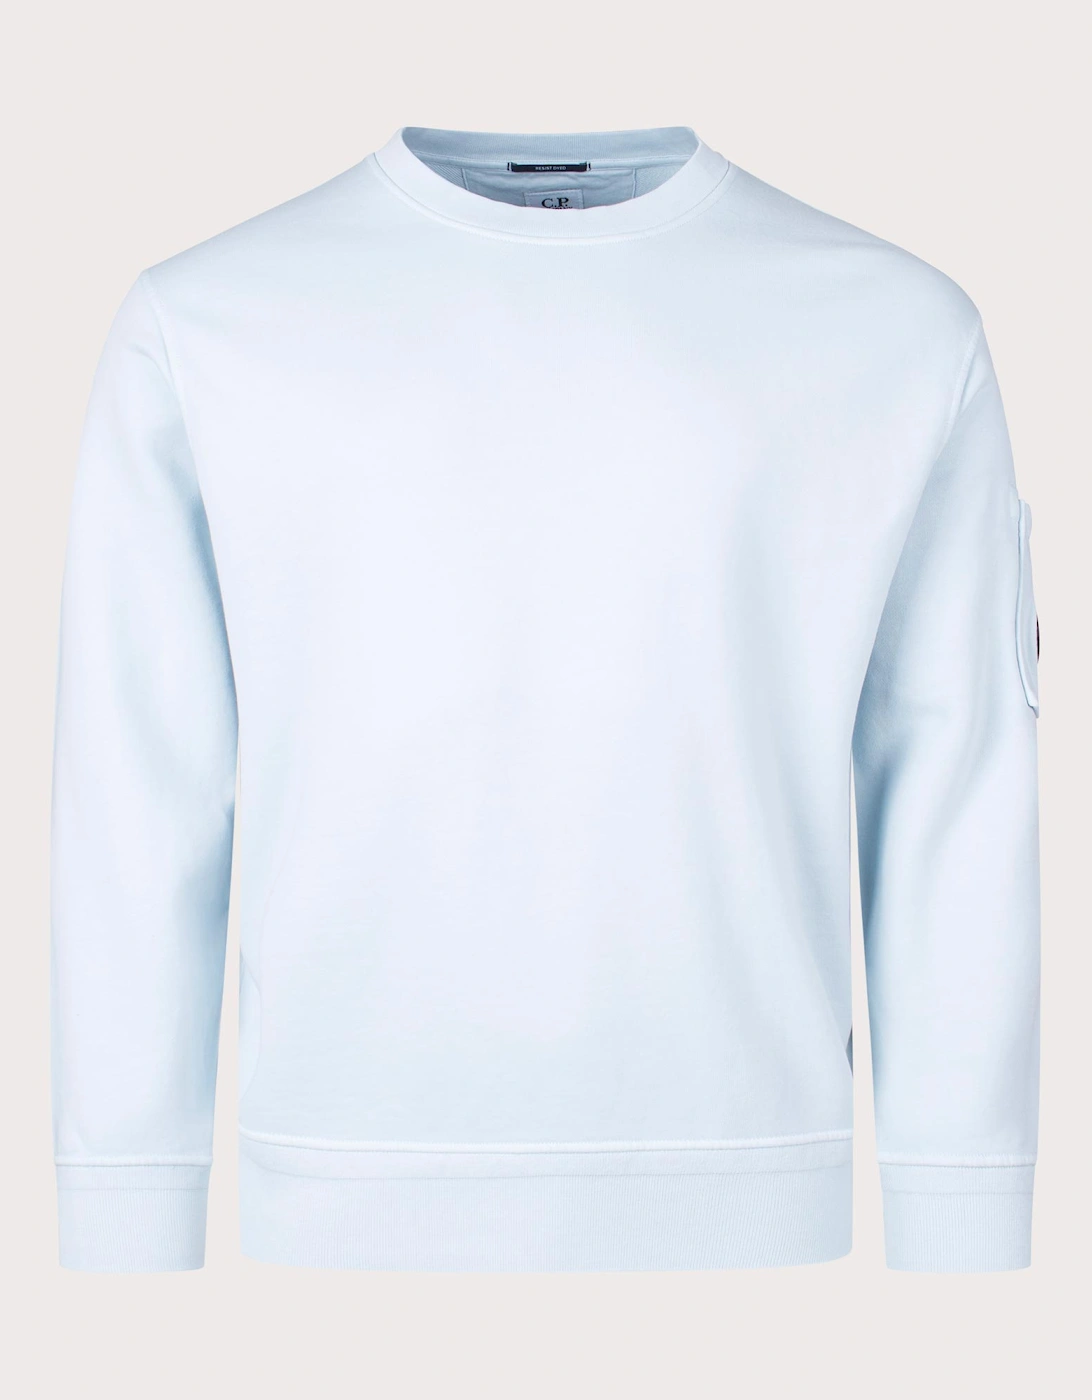 Cotton Diagonal Fleece Lens Sweatshirt